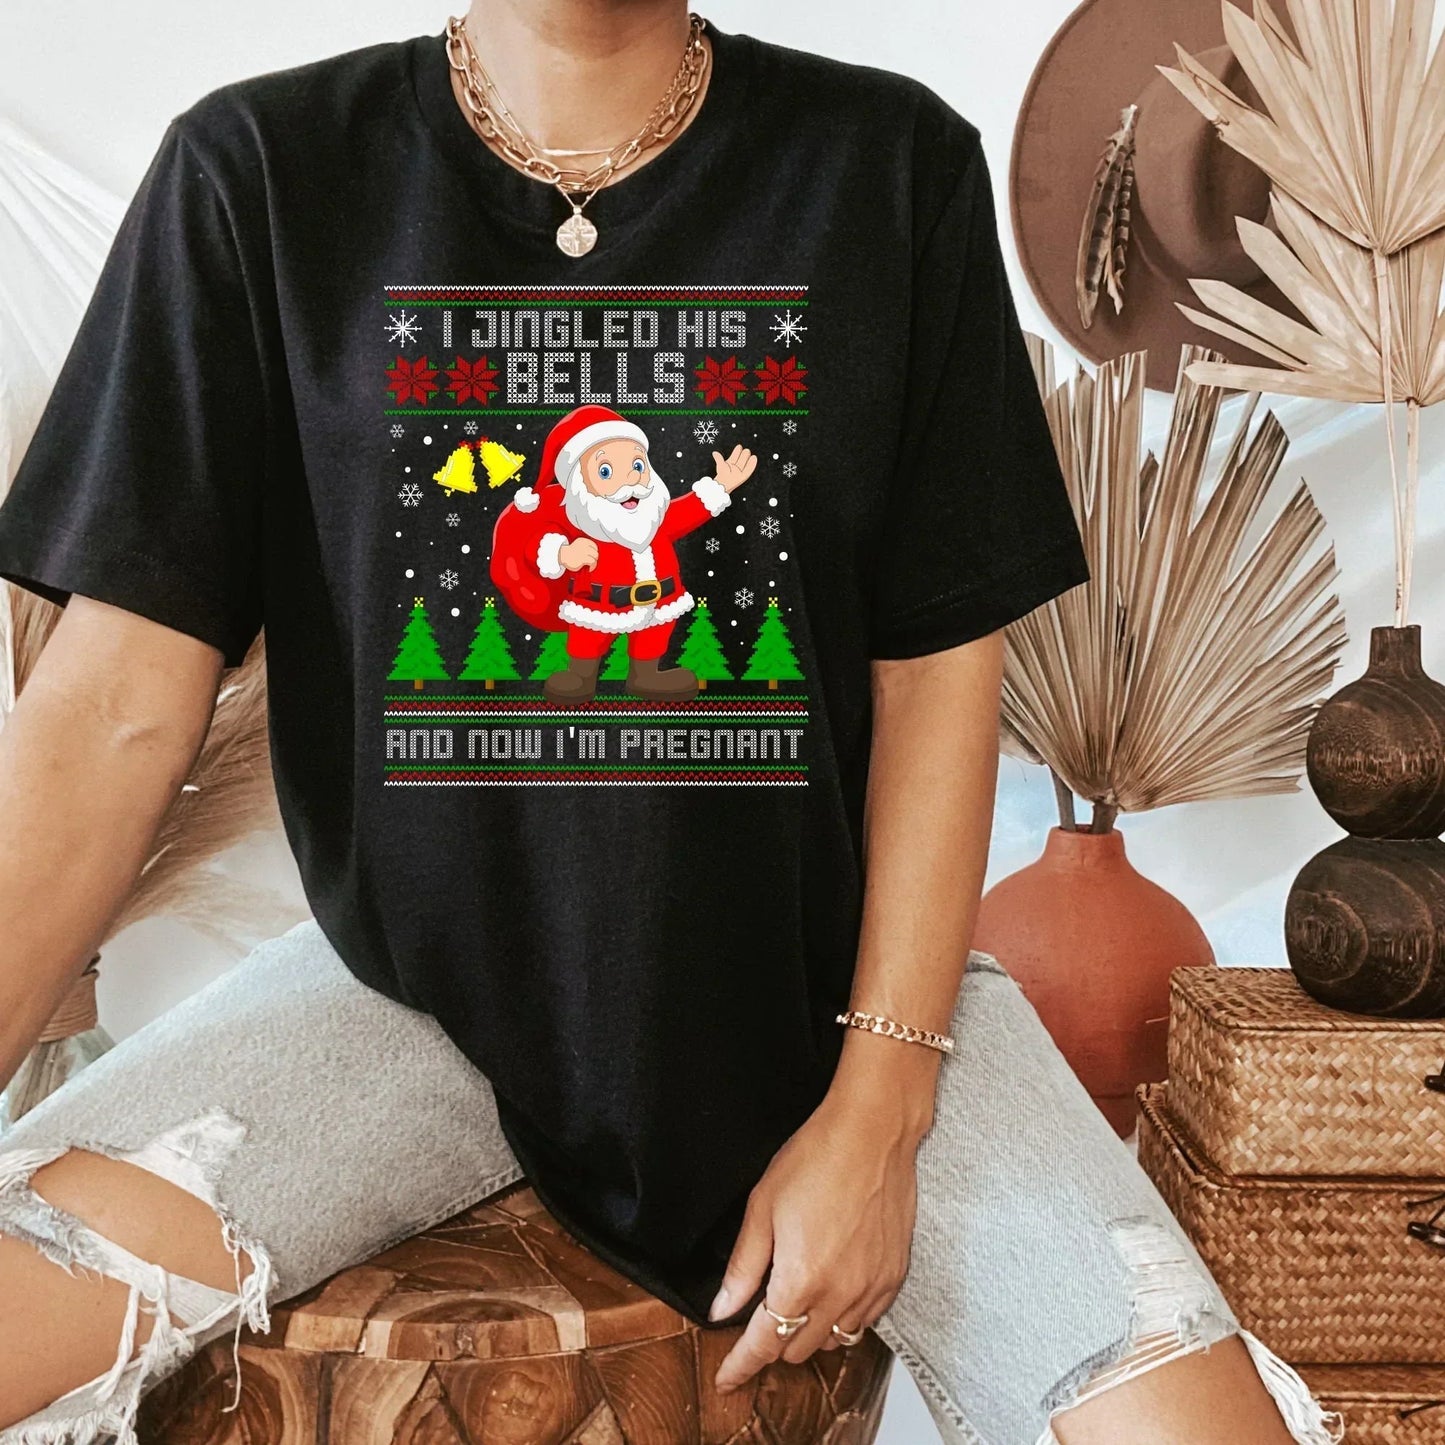 I Jingled His Bells, Now I'm Pregnant, Funny Christmas Pregnancy Reveal Shirt